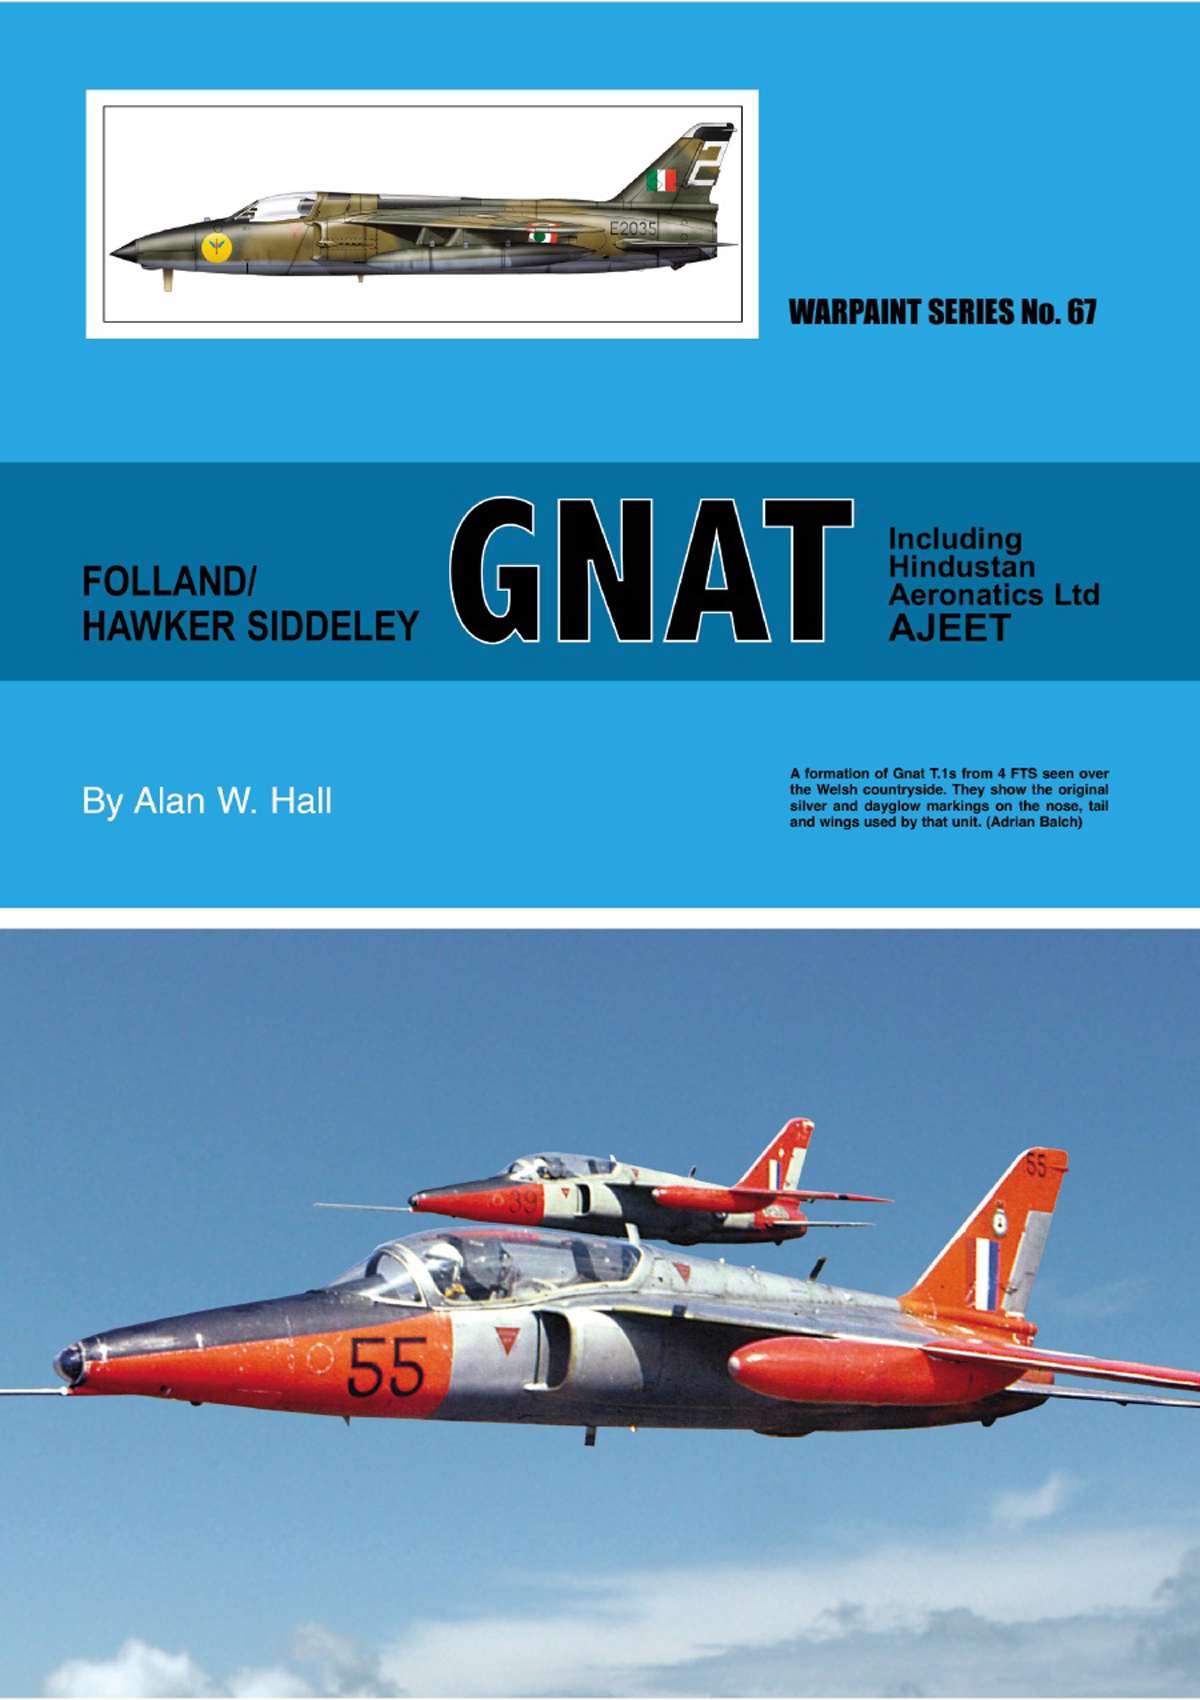 N67 - Folland/Hawker Siddeley Gnat and HAL AJEET